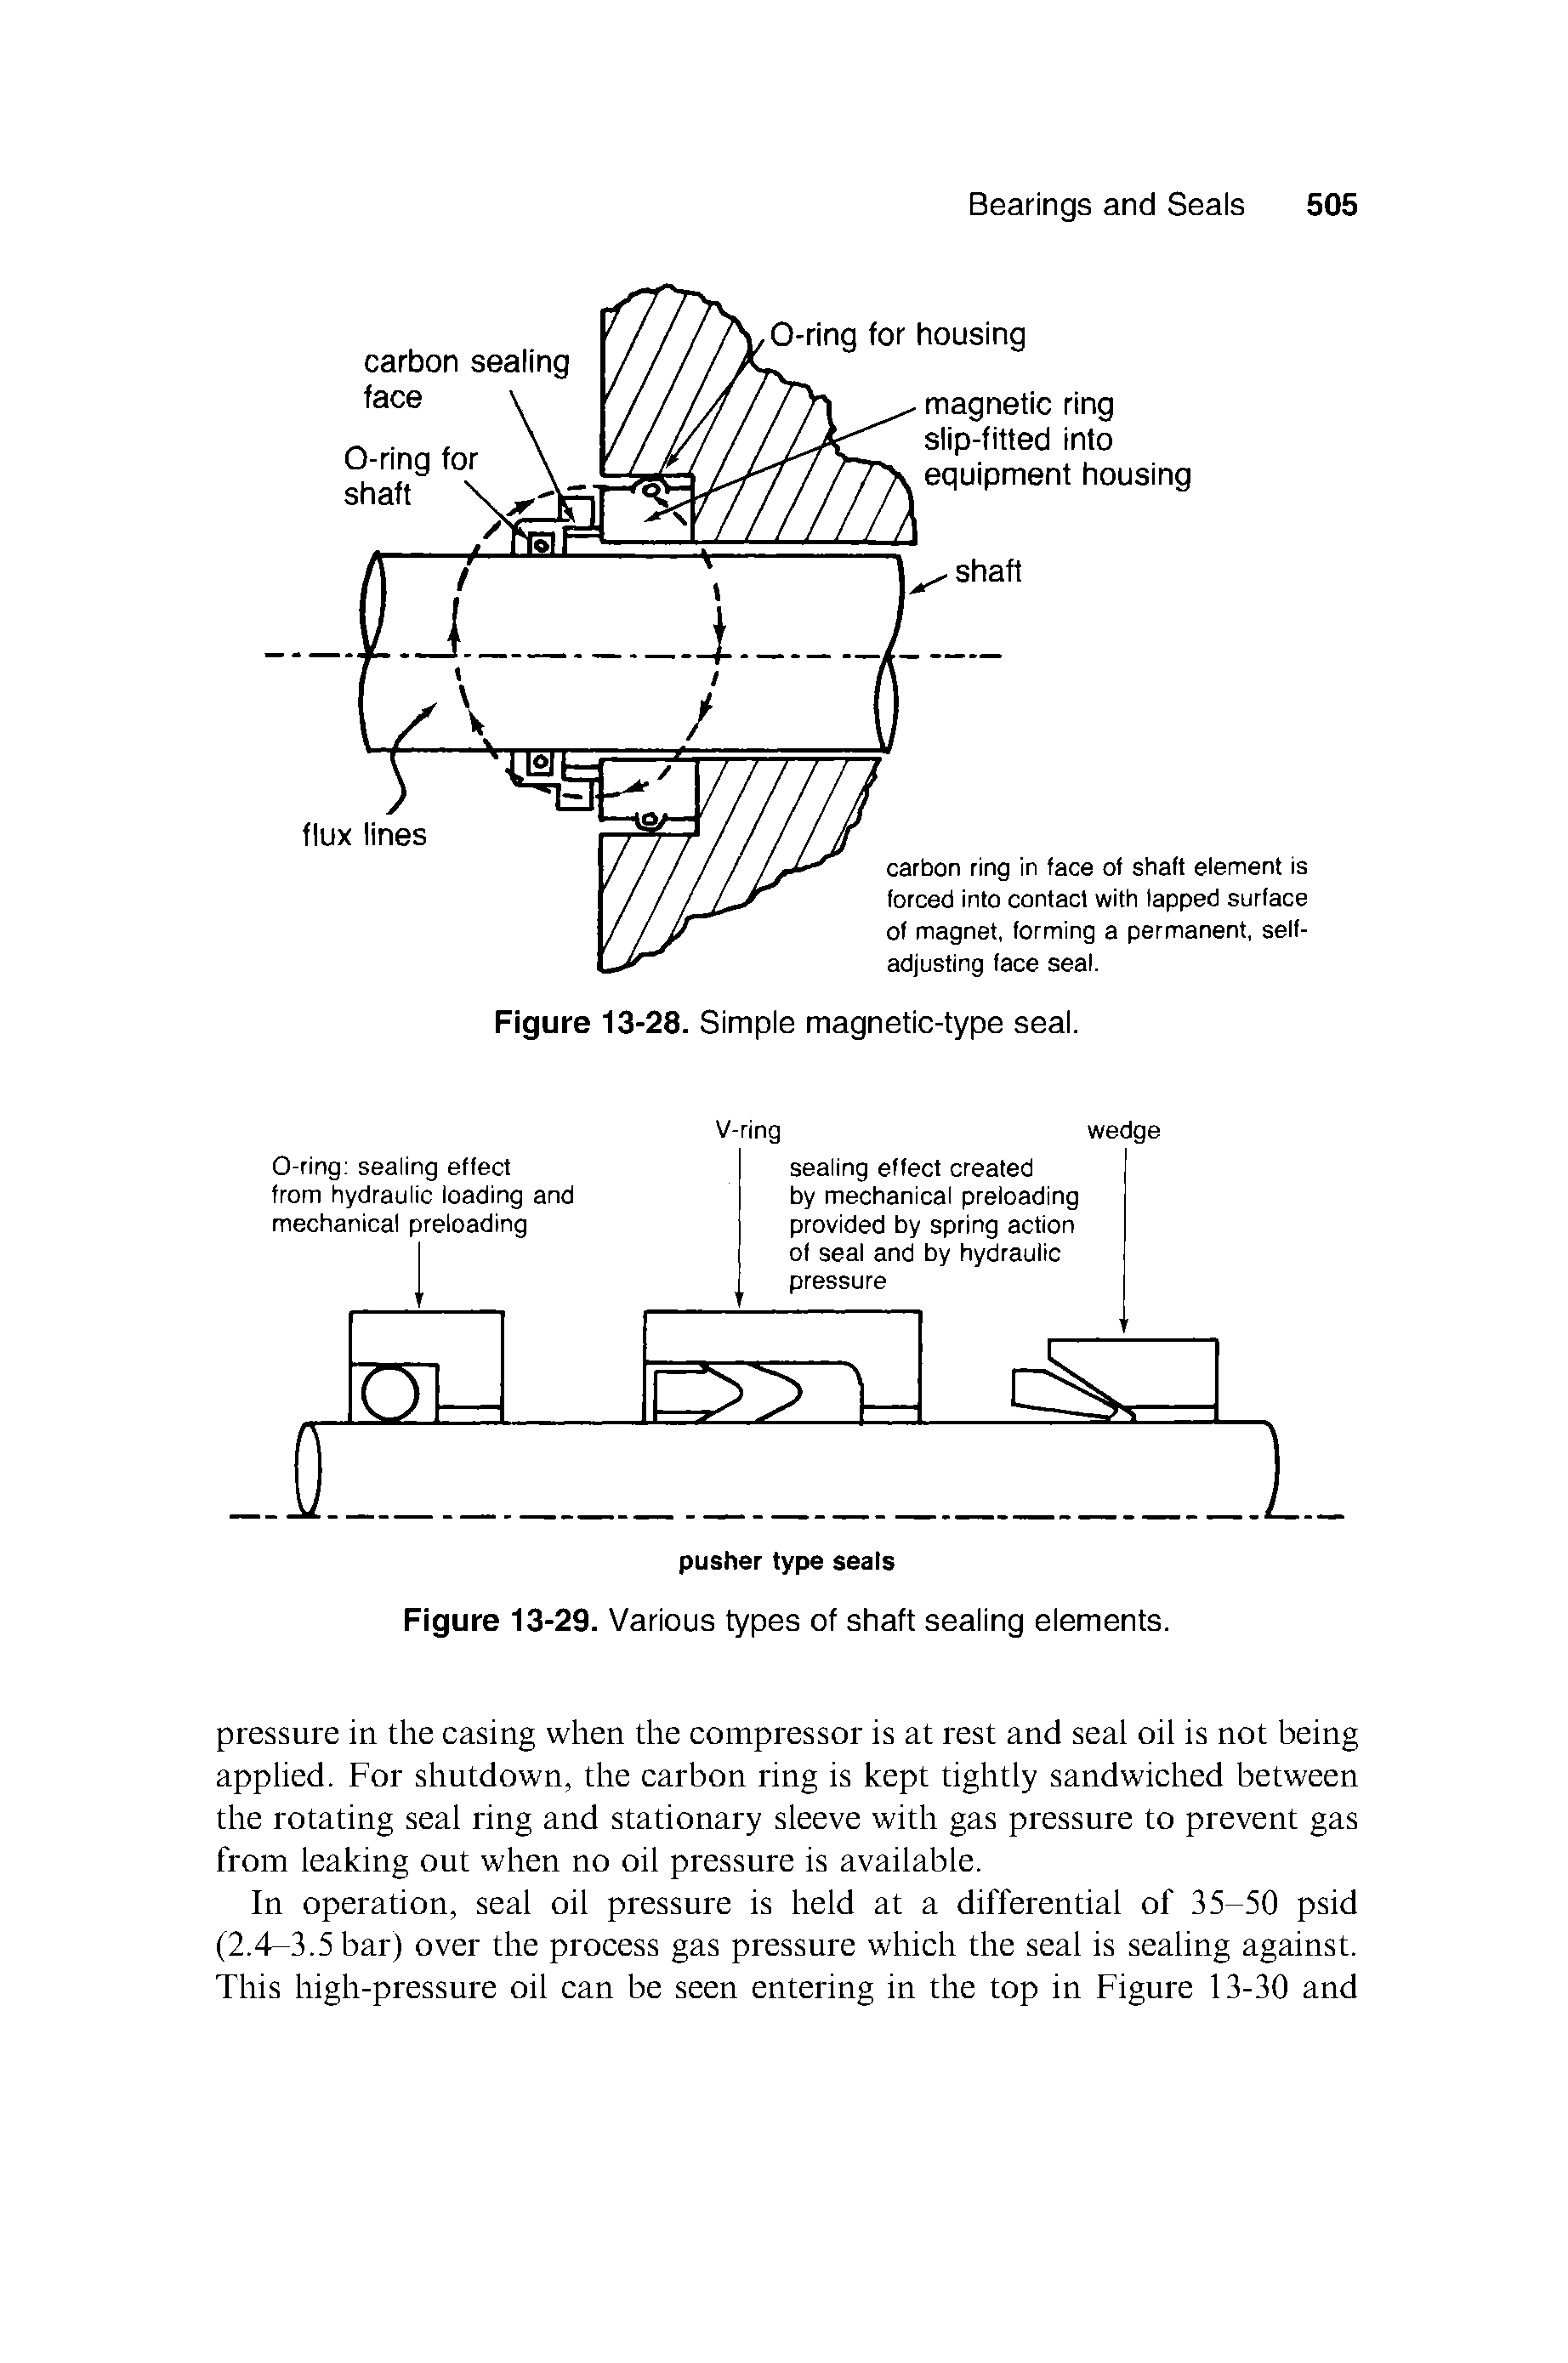 Figure 13-29. Various types of shaft sealing elements.